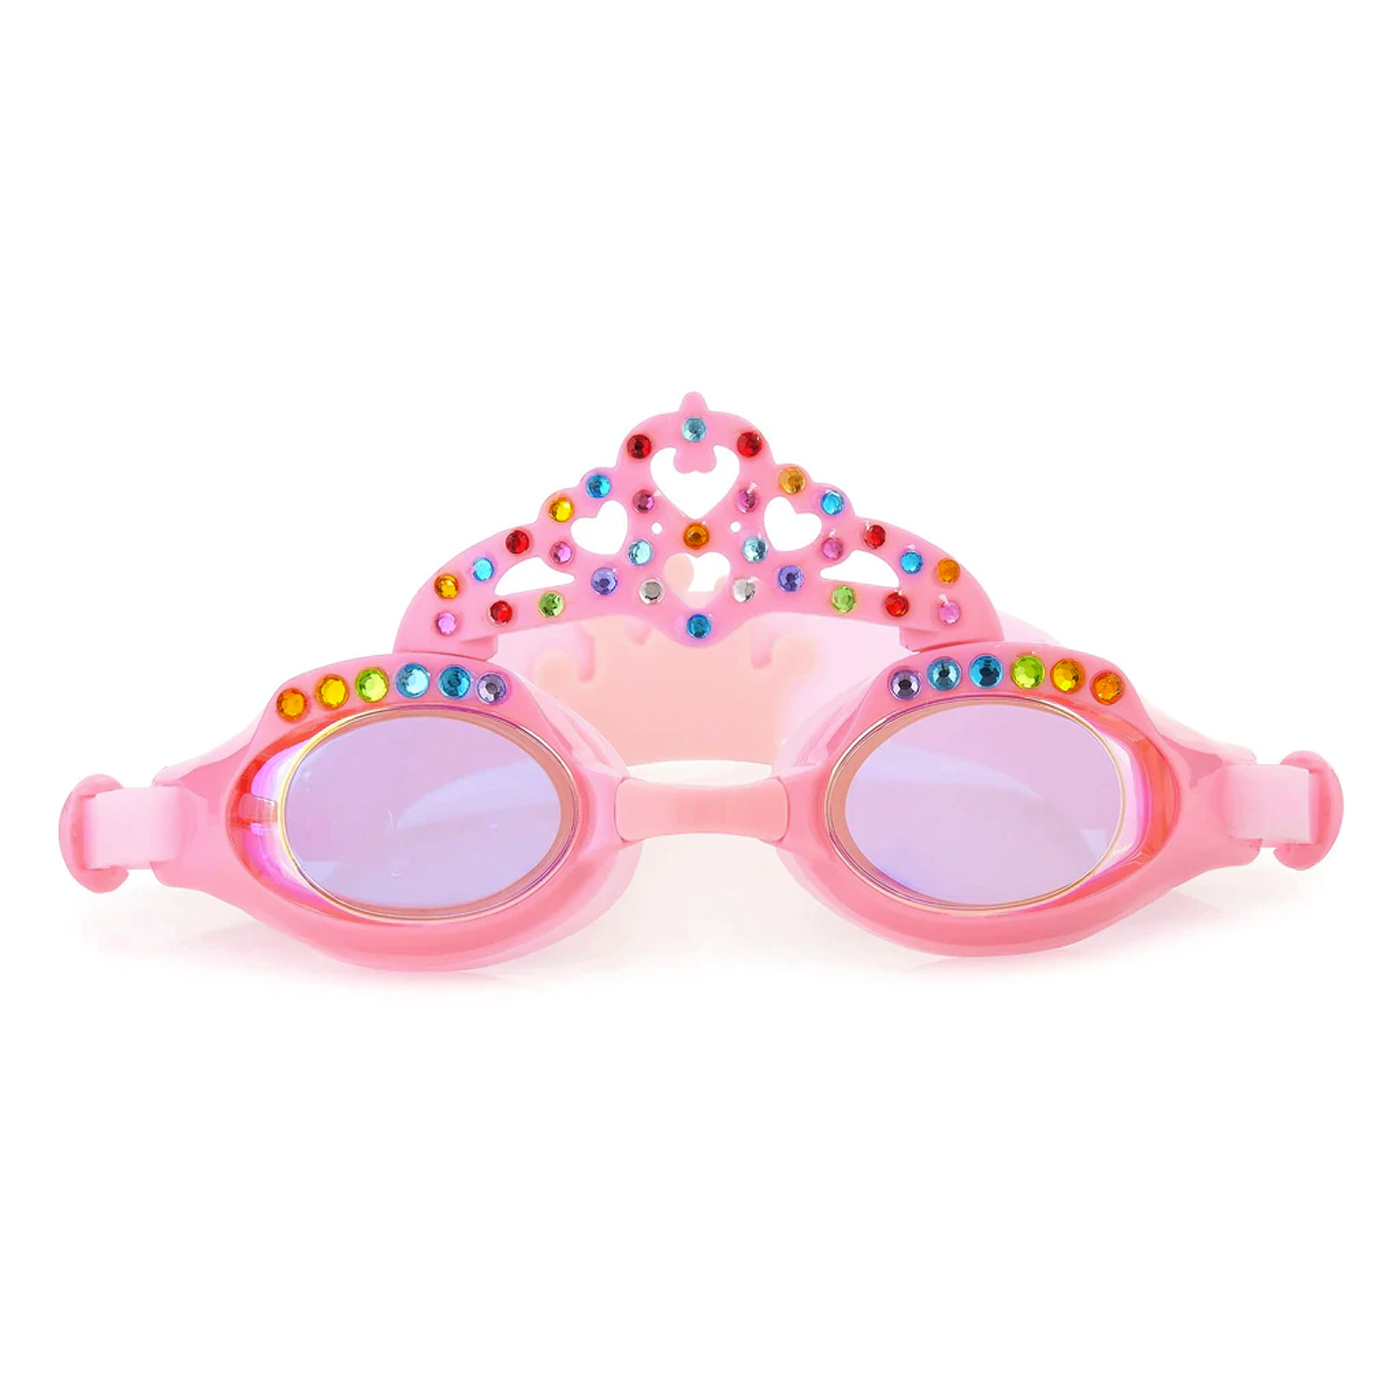  Bling2o Princess Crown Deniz Gözlüğü  | Peach Pink